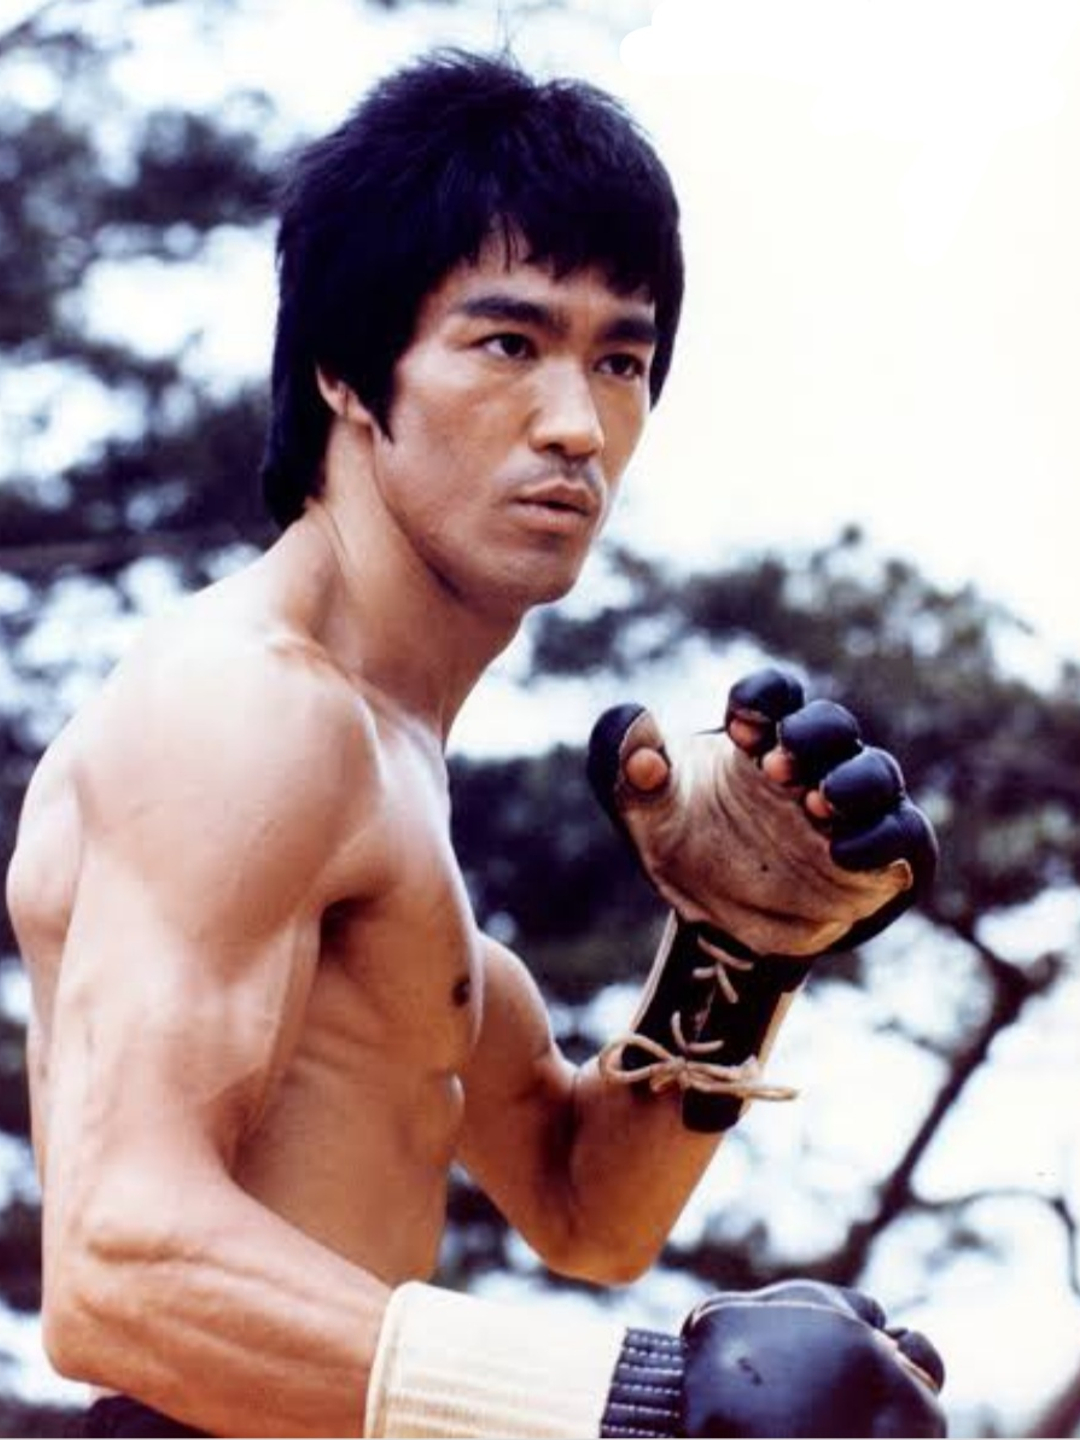 Bruce Lee early career